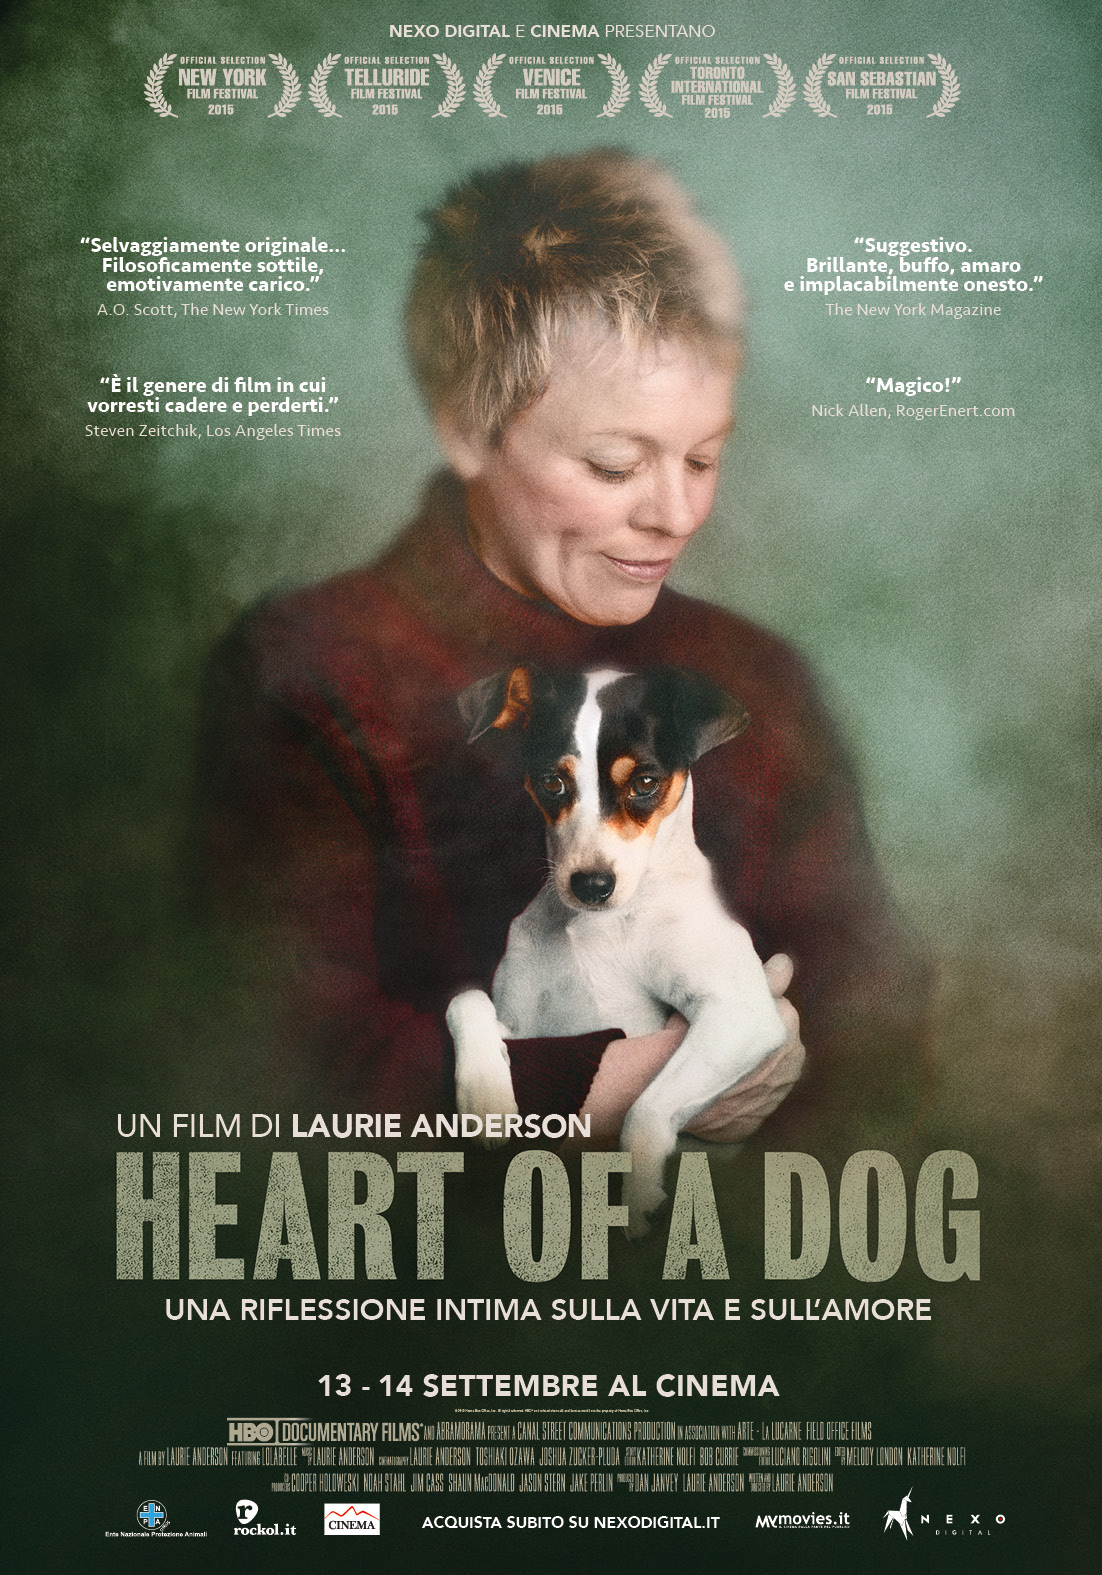 Heart of a dog - Un film di Laurie Anderson